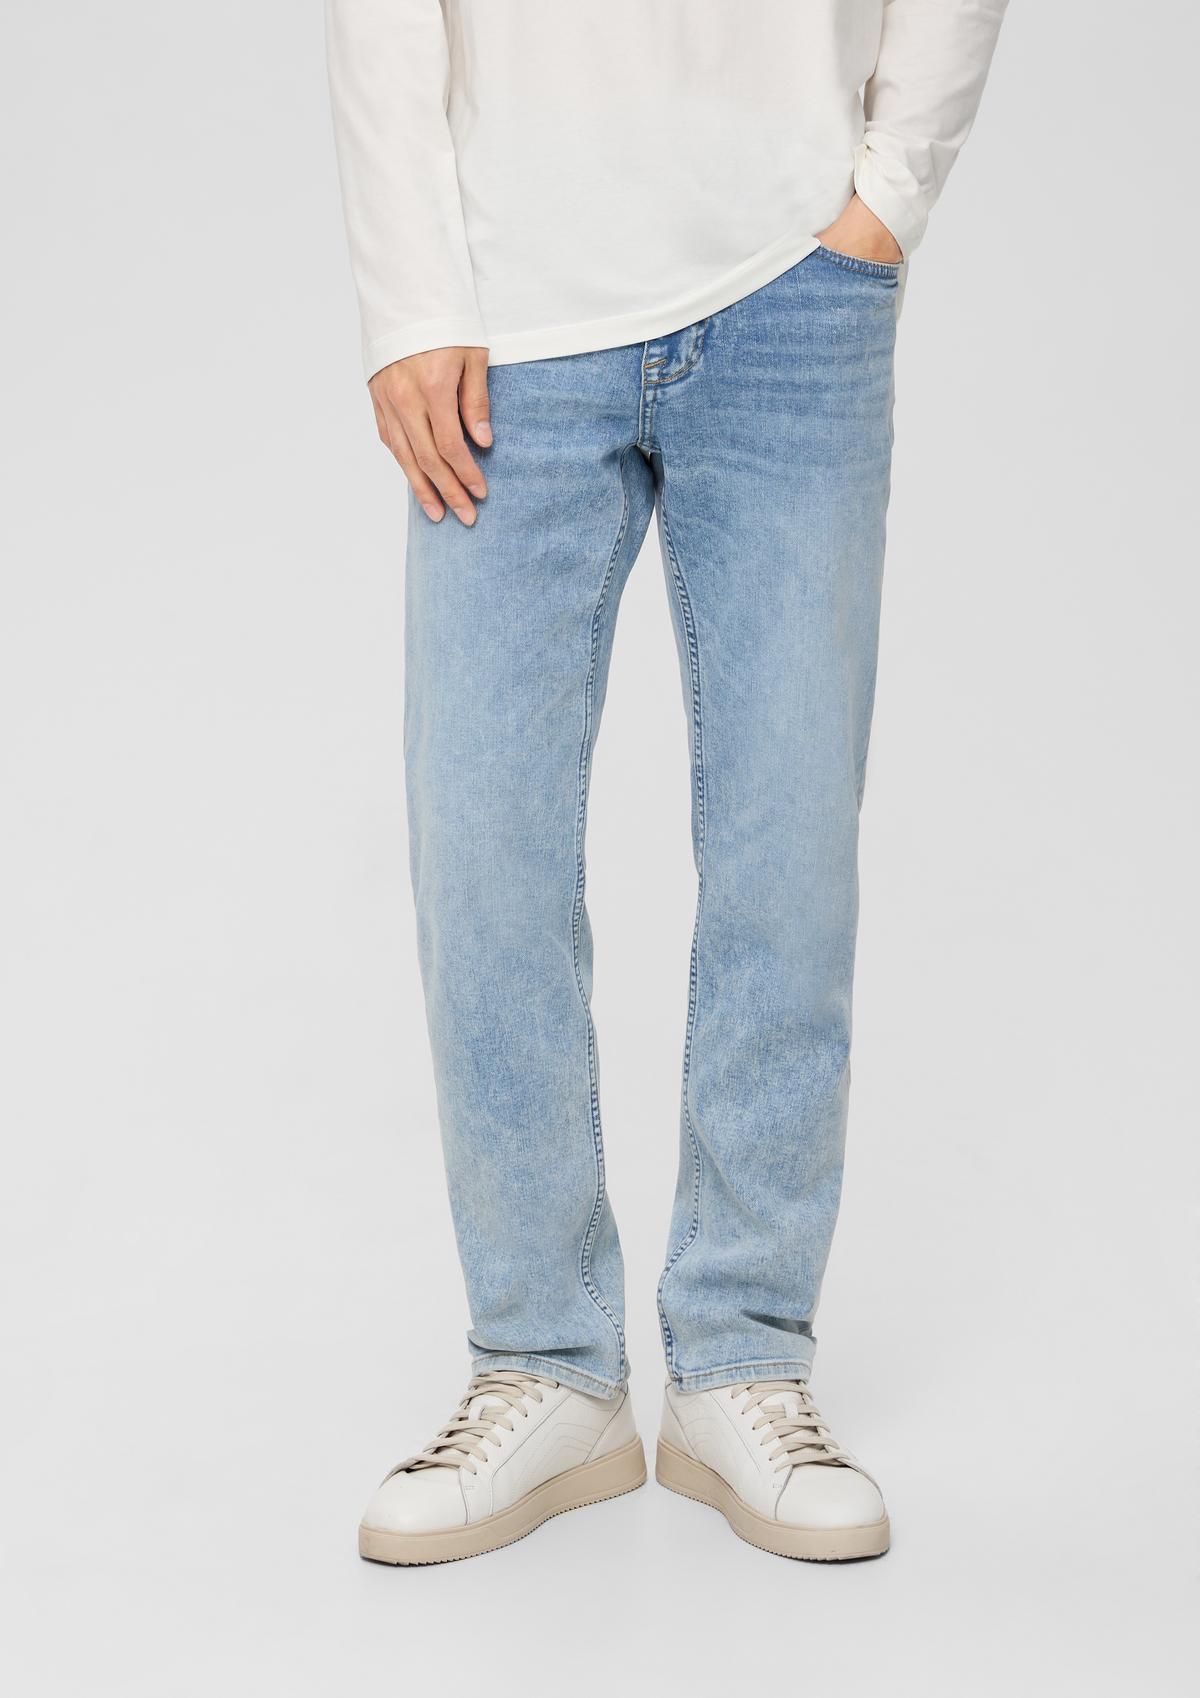 Jeans Nelio / Slim Fit / Mid Rise / Slim Leg / Baumwollstretch